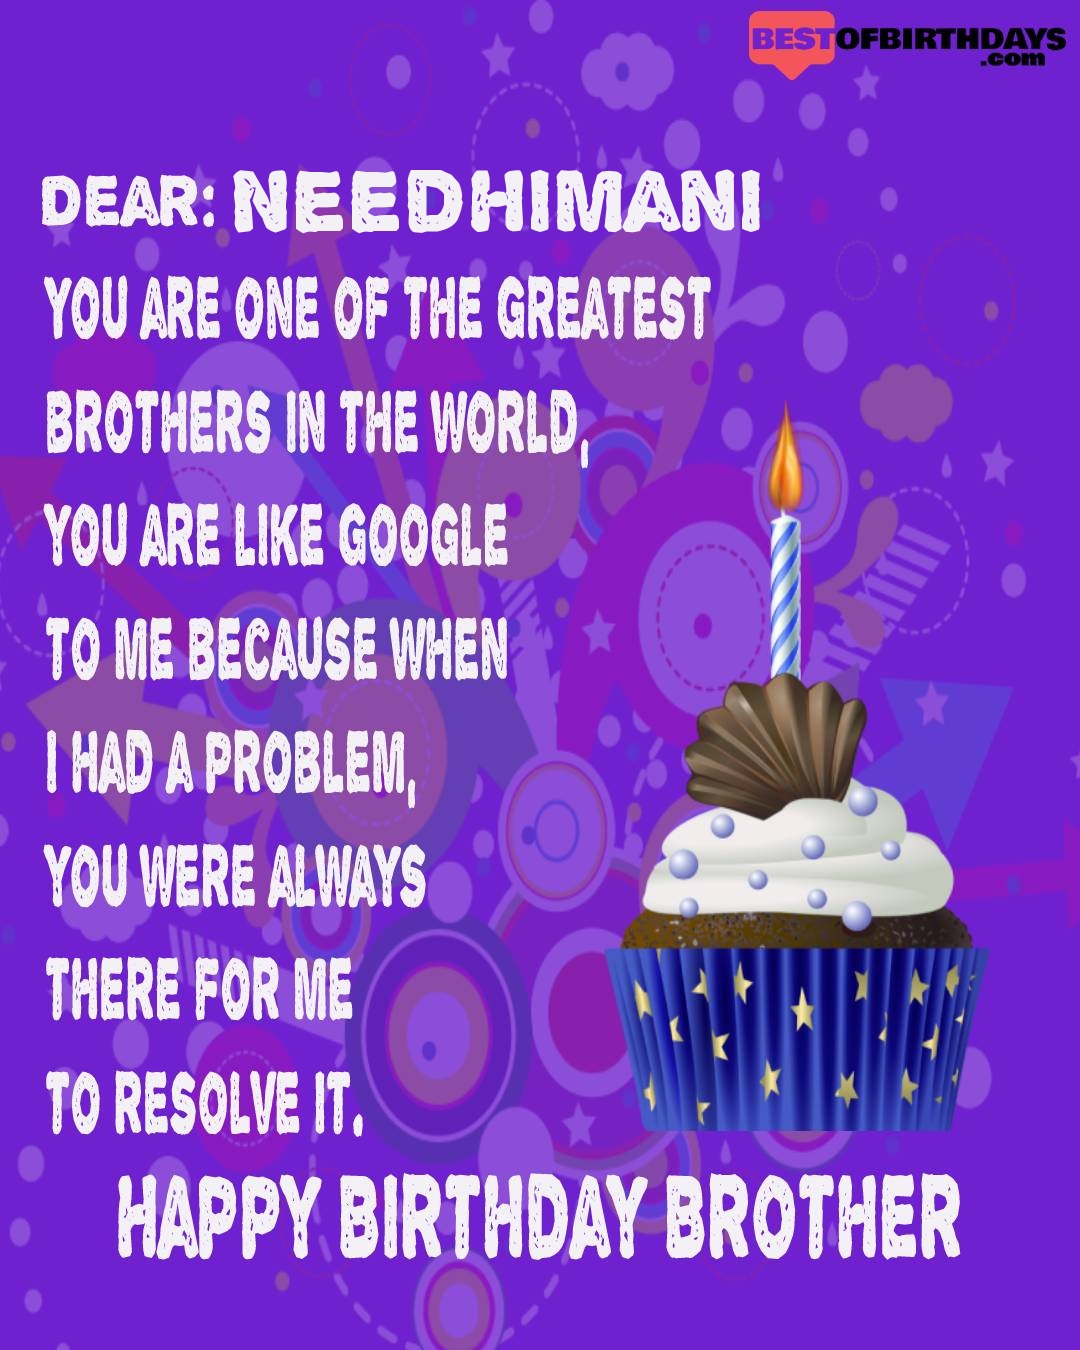 Happy birthday needhimani bhai brother bro